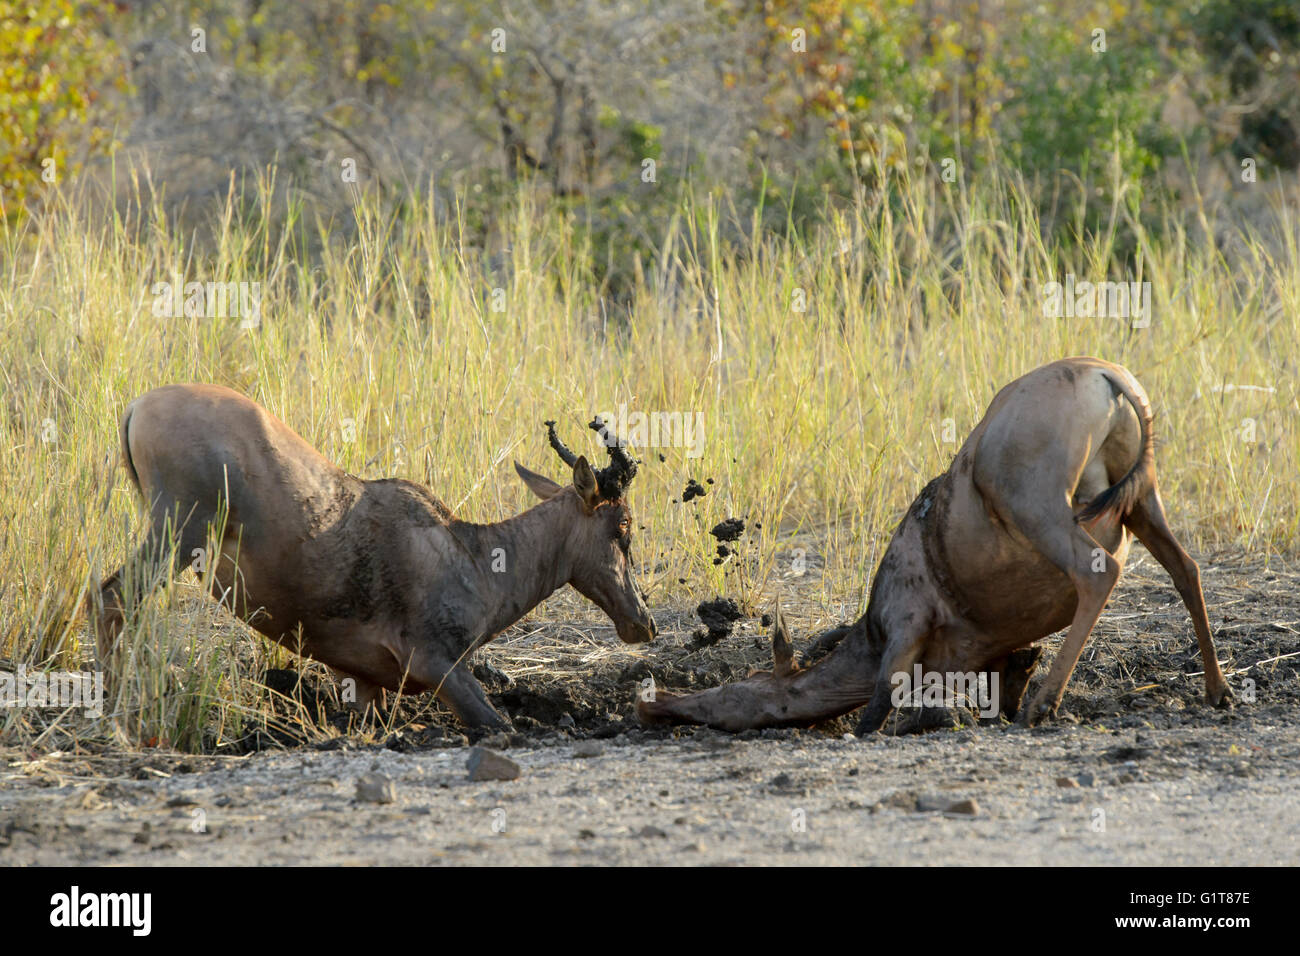 Topi, Tsessebe antelope (Damaliscus lunatus), crawling in mud, Kruger National Park, South Africa. Stock Photo